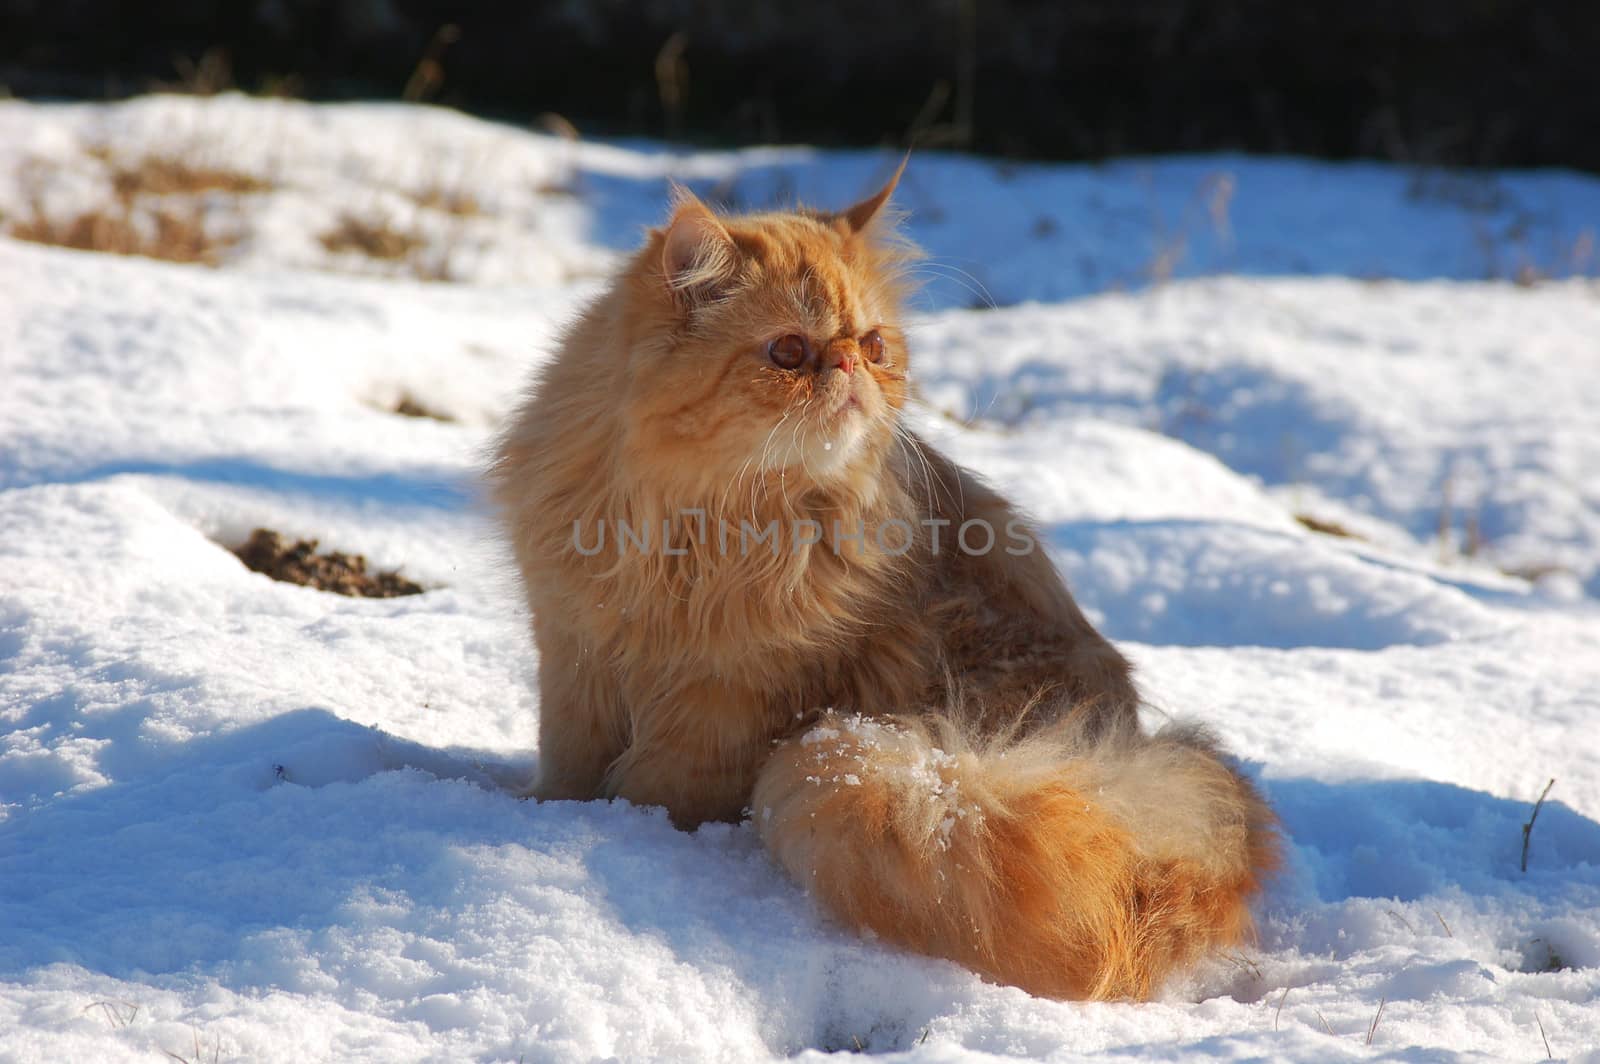 Gilbi on snow by edomor